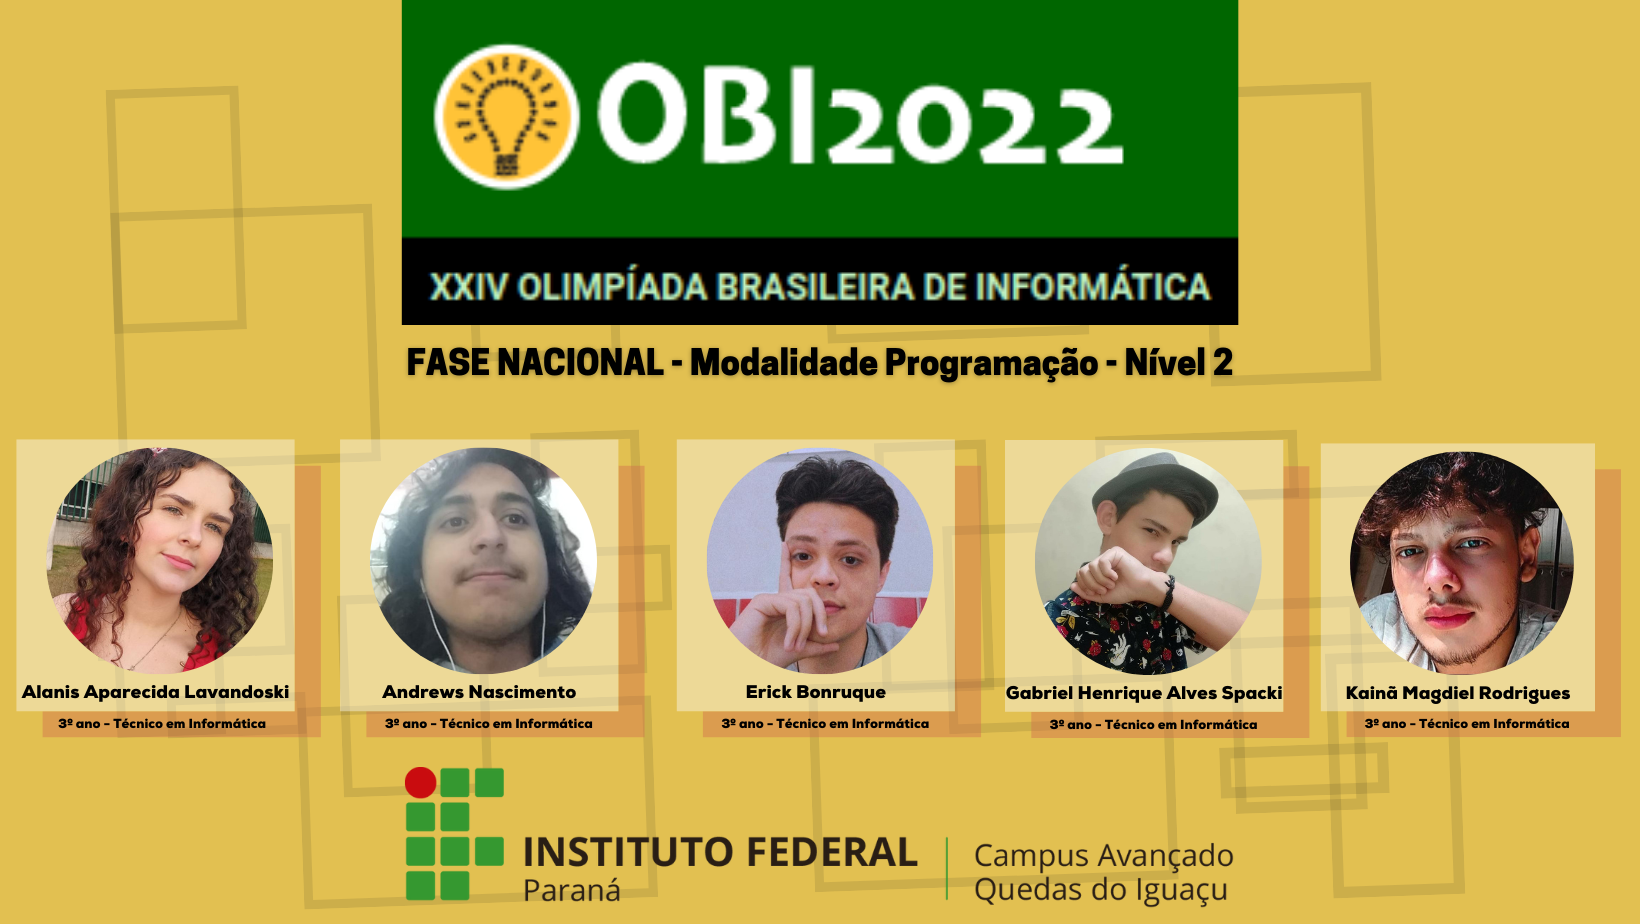 Gabriel Machado - Kenzie Academy Brasil - Nilópolis, Rio de Janeiro, Brasil